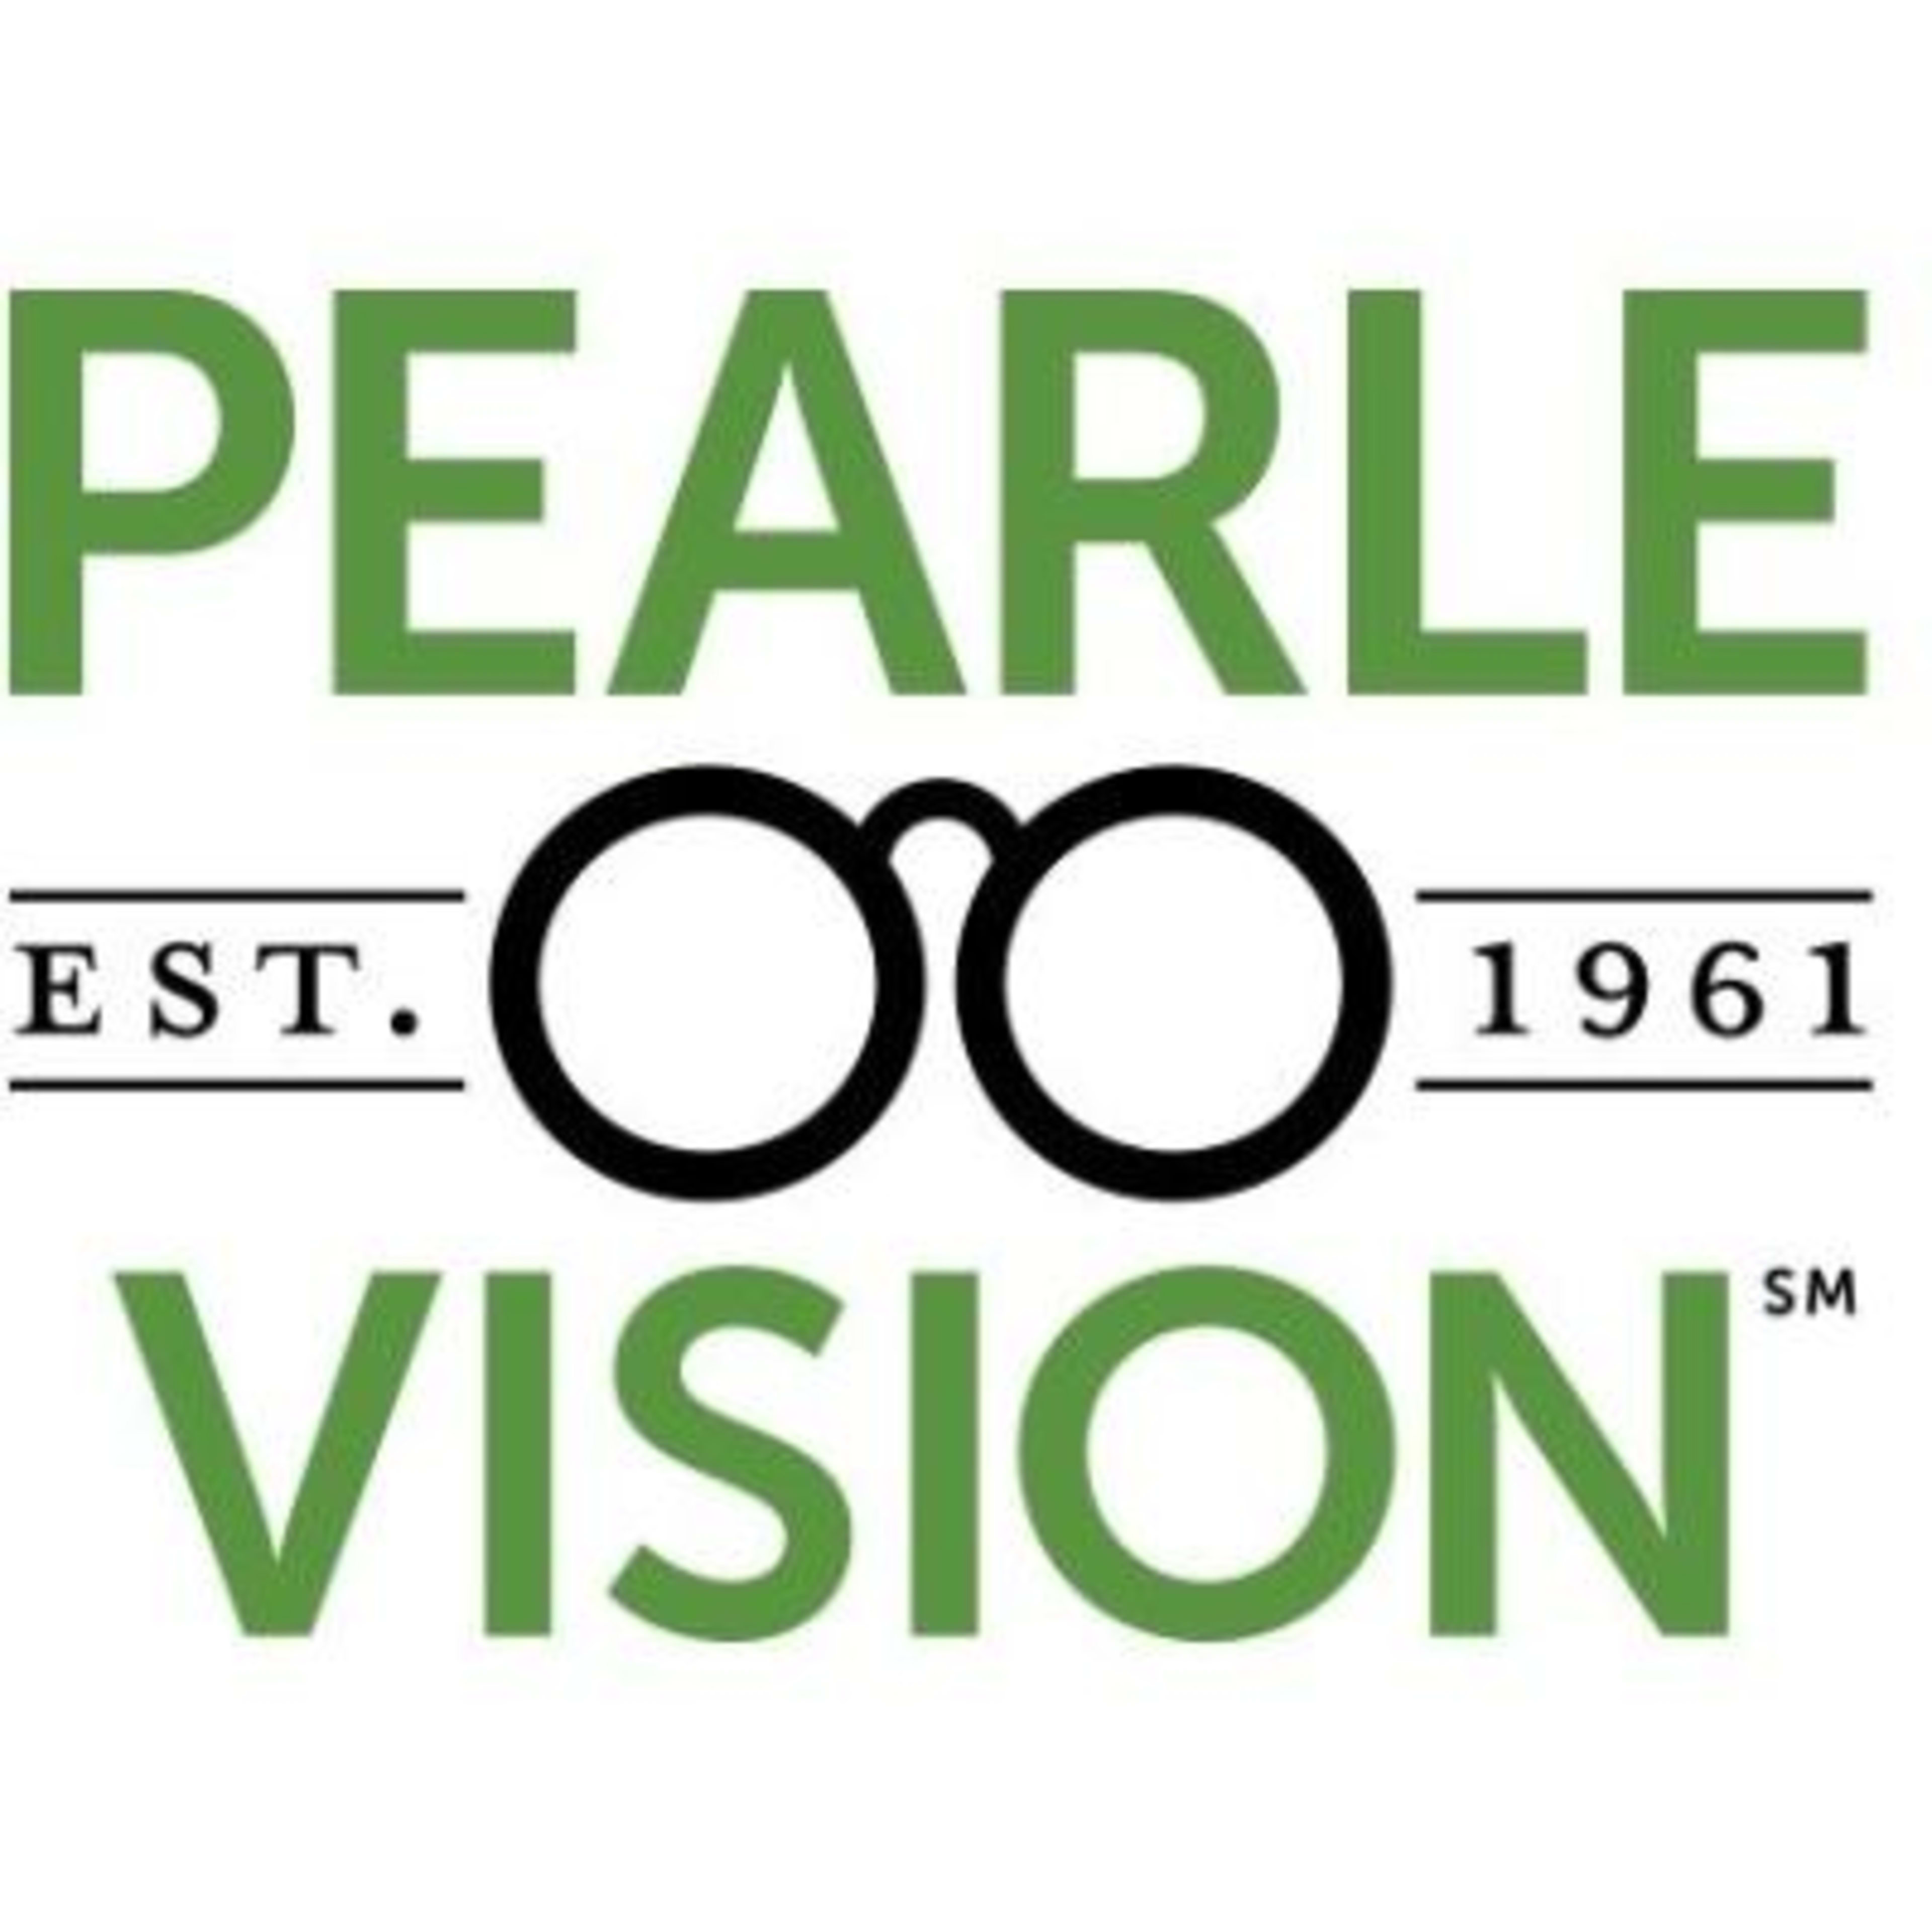 Pearle Vision Code